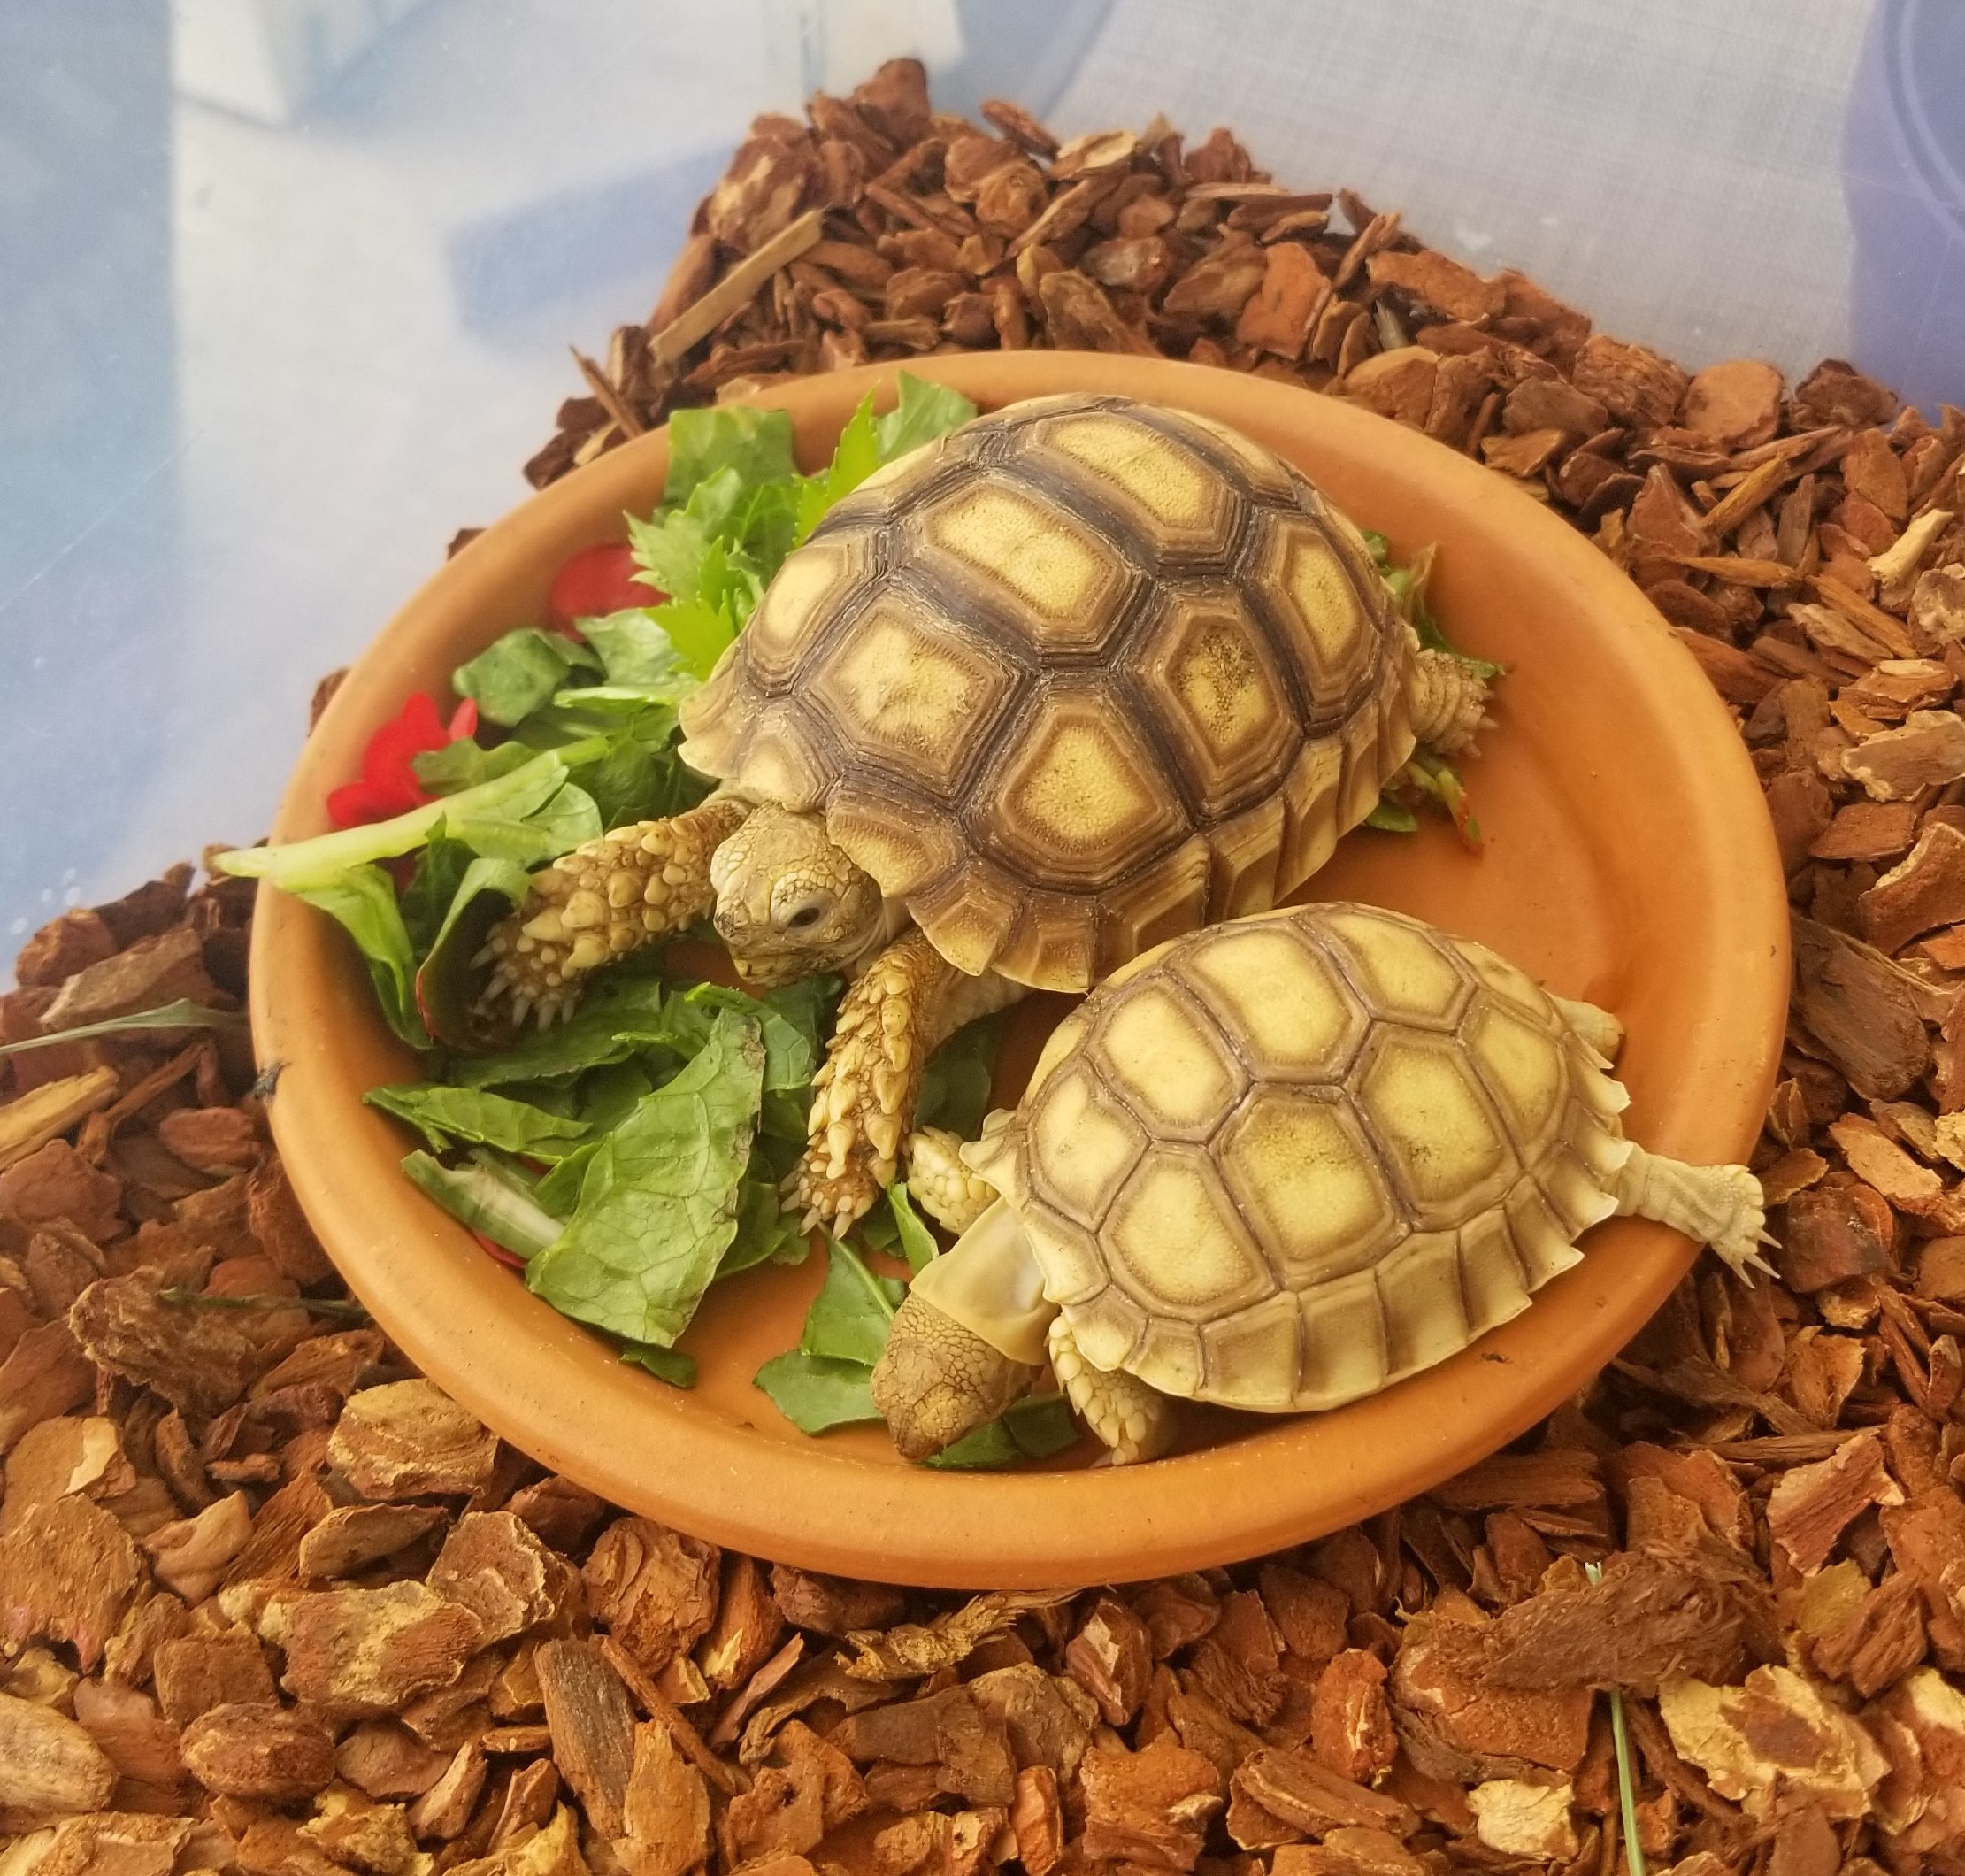 best pets for kids, tortoise enclosure,tortoise bedding,best pets for kids, sulcata tortoise, sulcata tortoise habitat, sulcata tortoise care, sulcata tortoise diet, sulcata tortoise enclosure